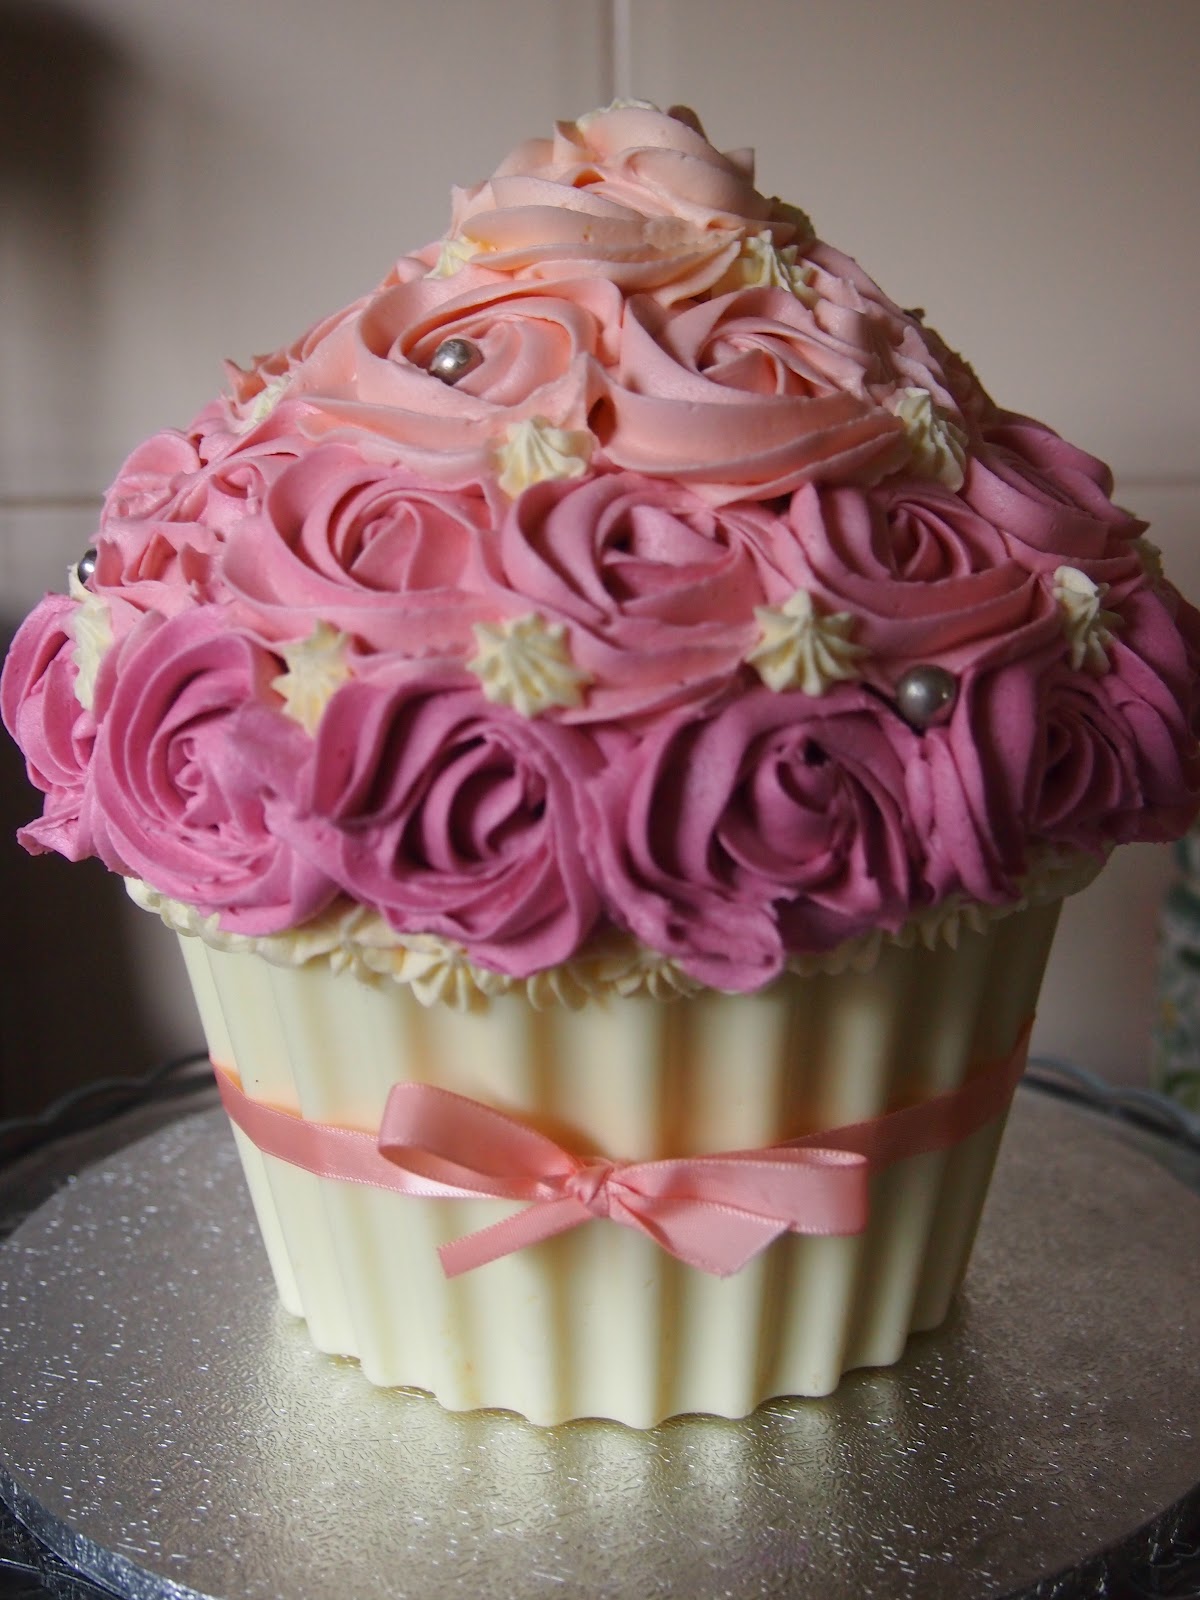 How to Make a Giant Cupcake Birthday Cake